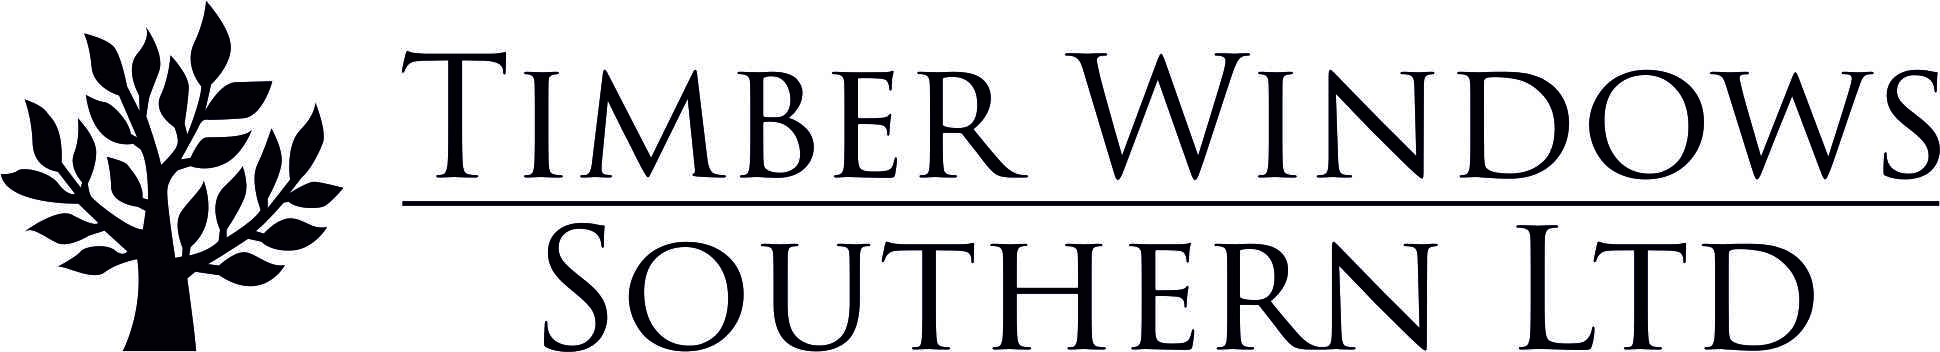 Timber Windows Southern logo